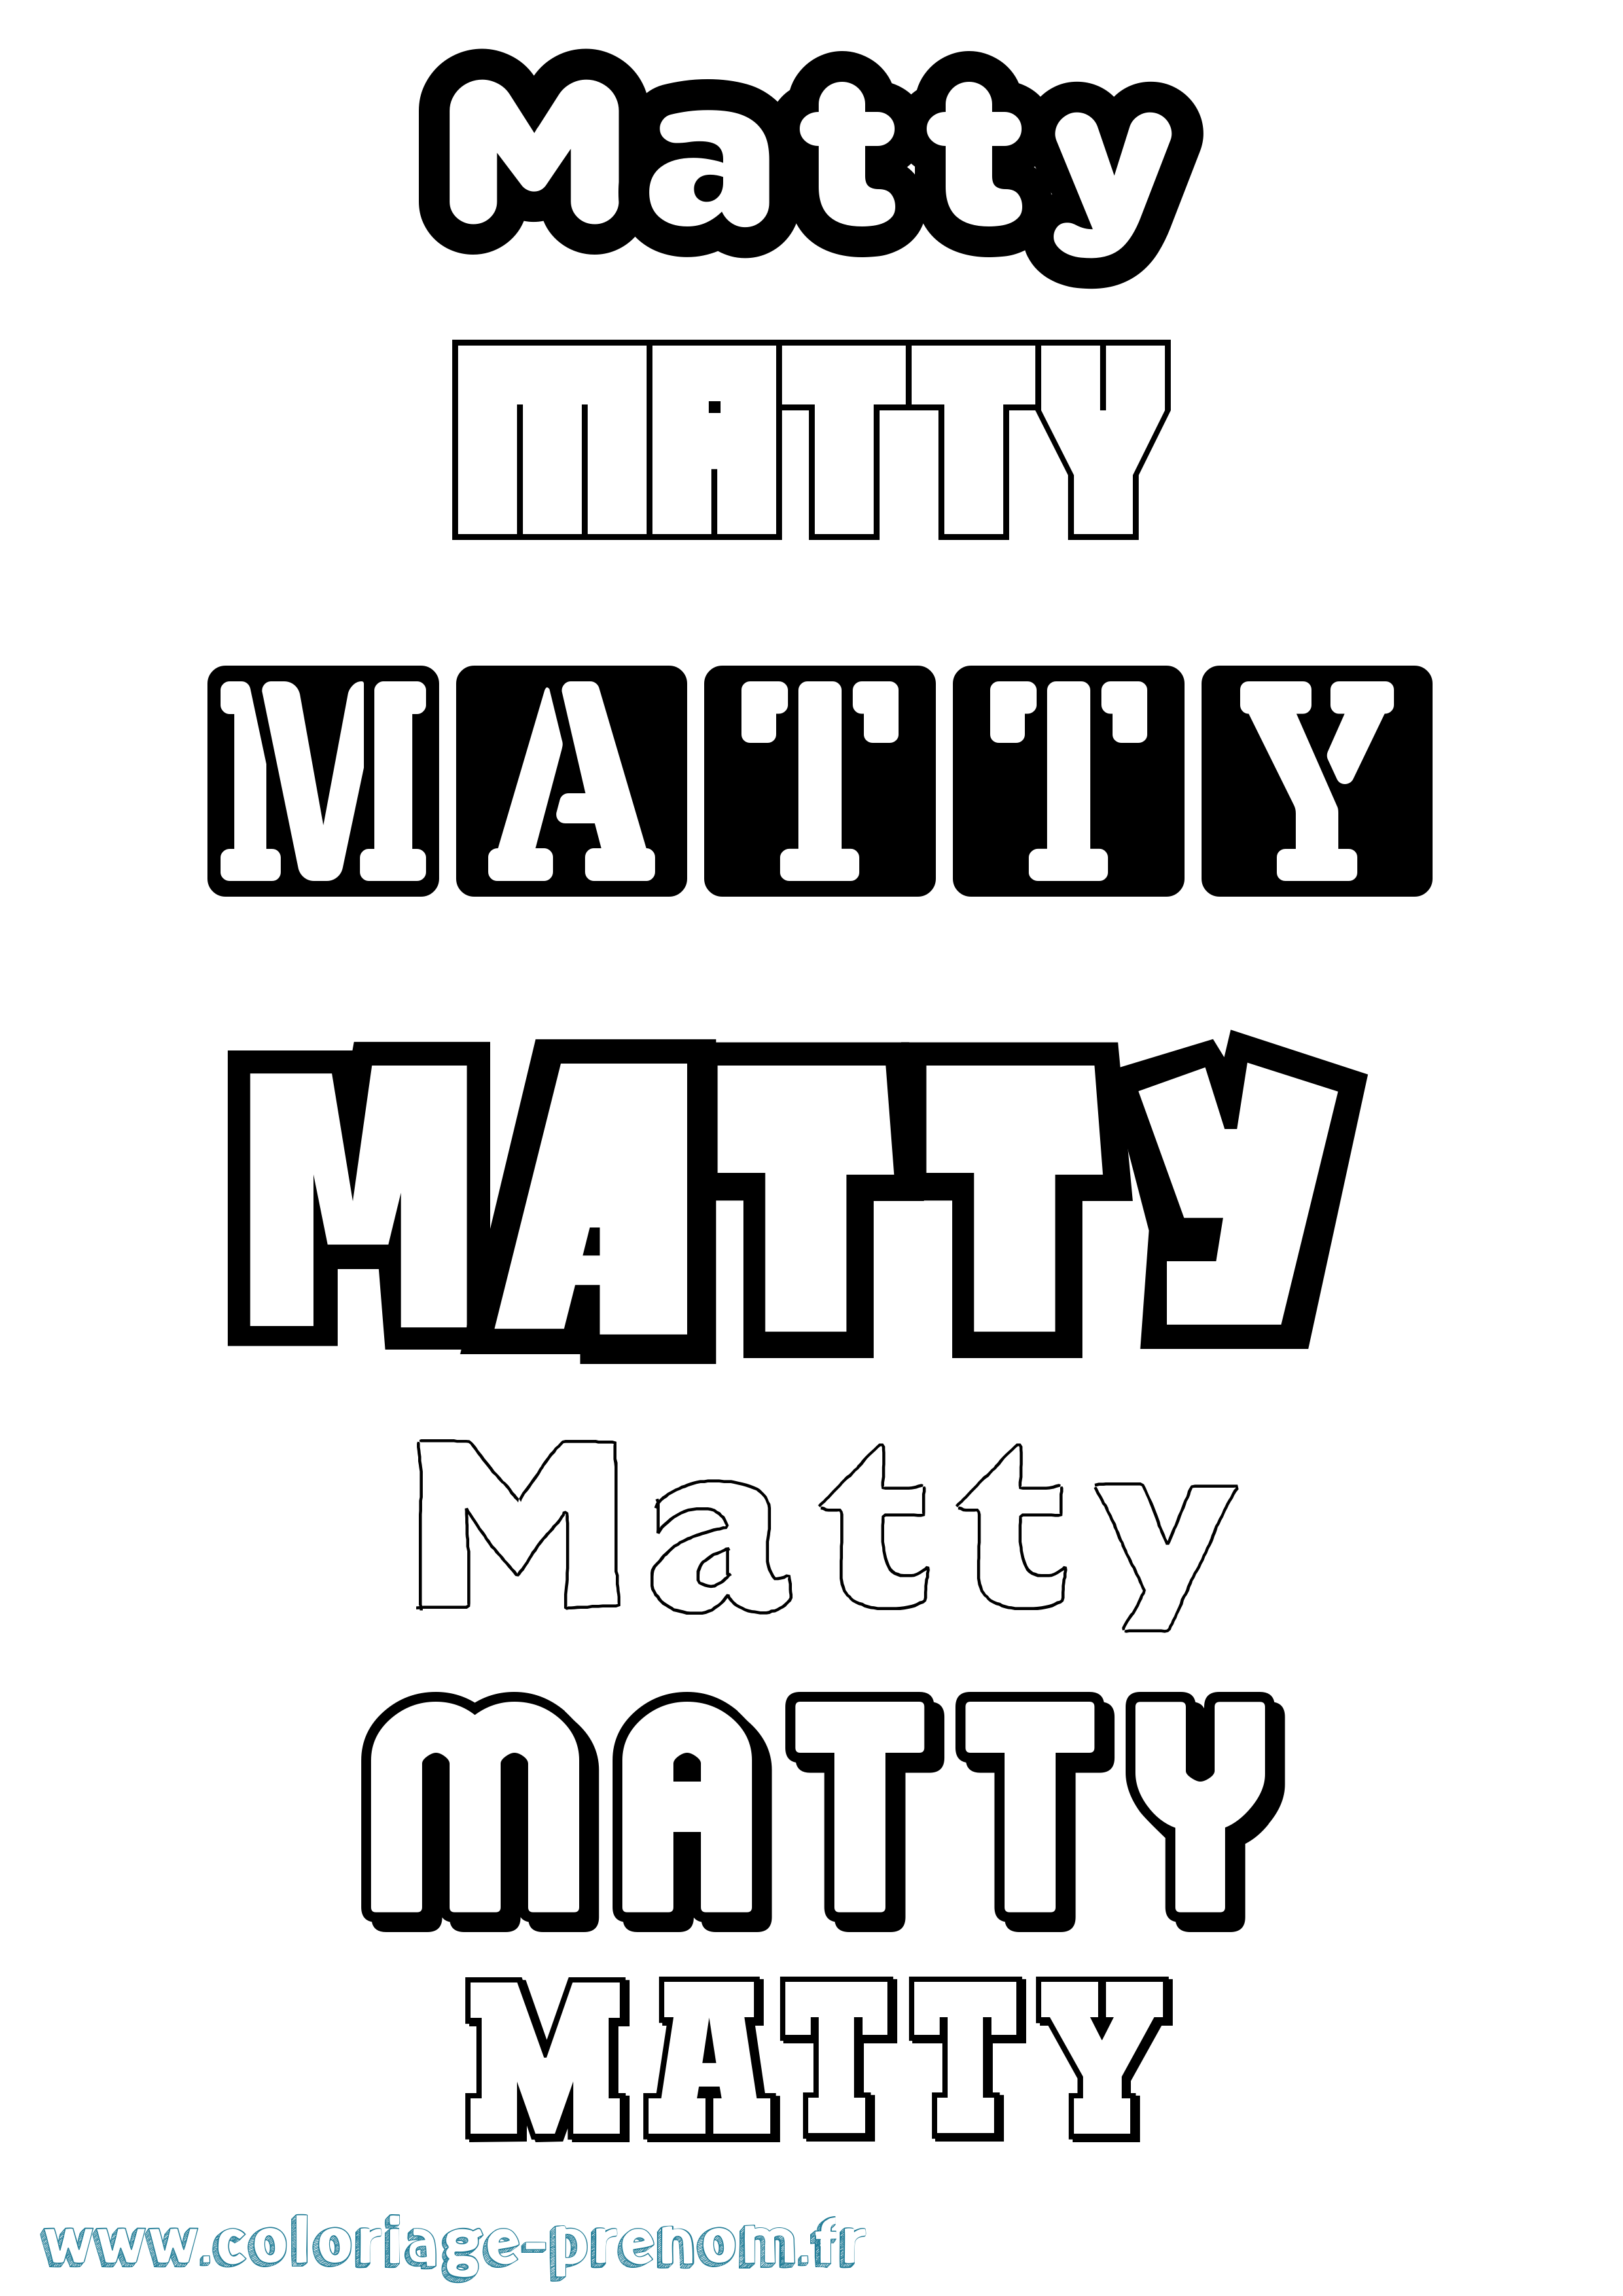 Coloriage prénom Matty Simple